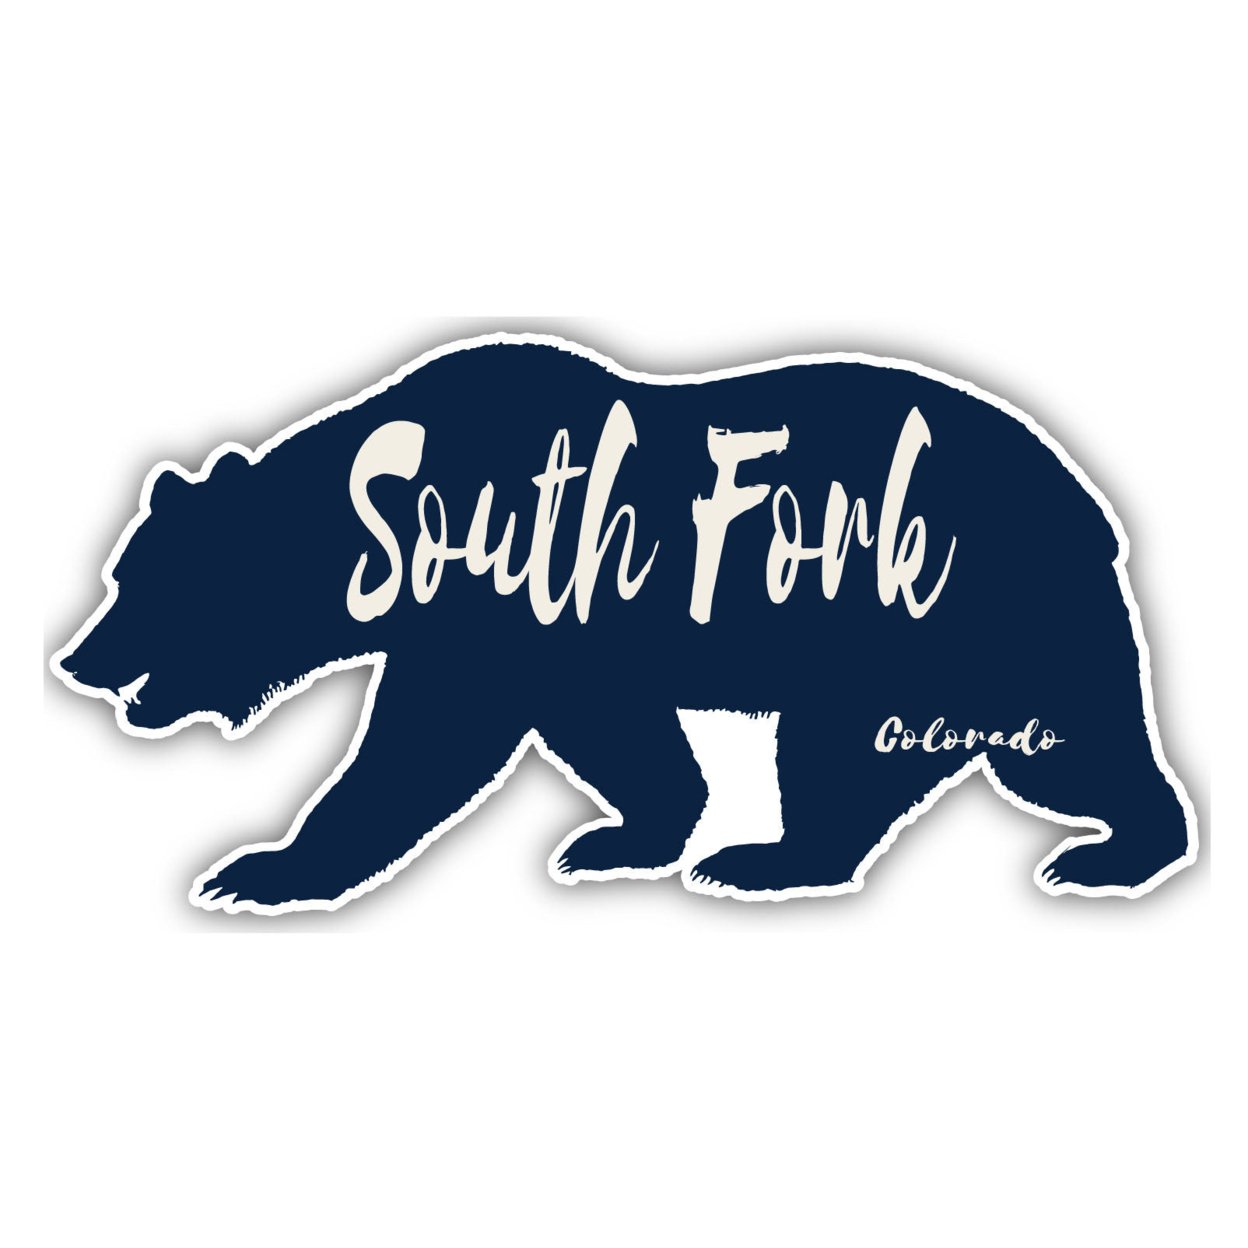 South Fork Colorado Souvenir Decorative Stickers (Choose Theme And Size) - Single Unit, 2-Inch, Tent